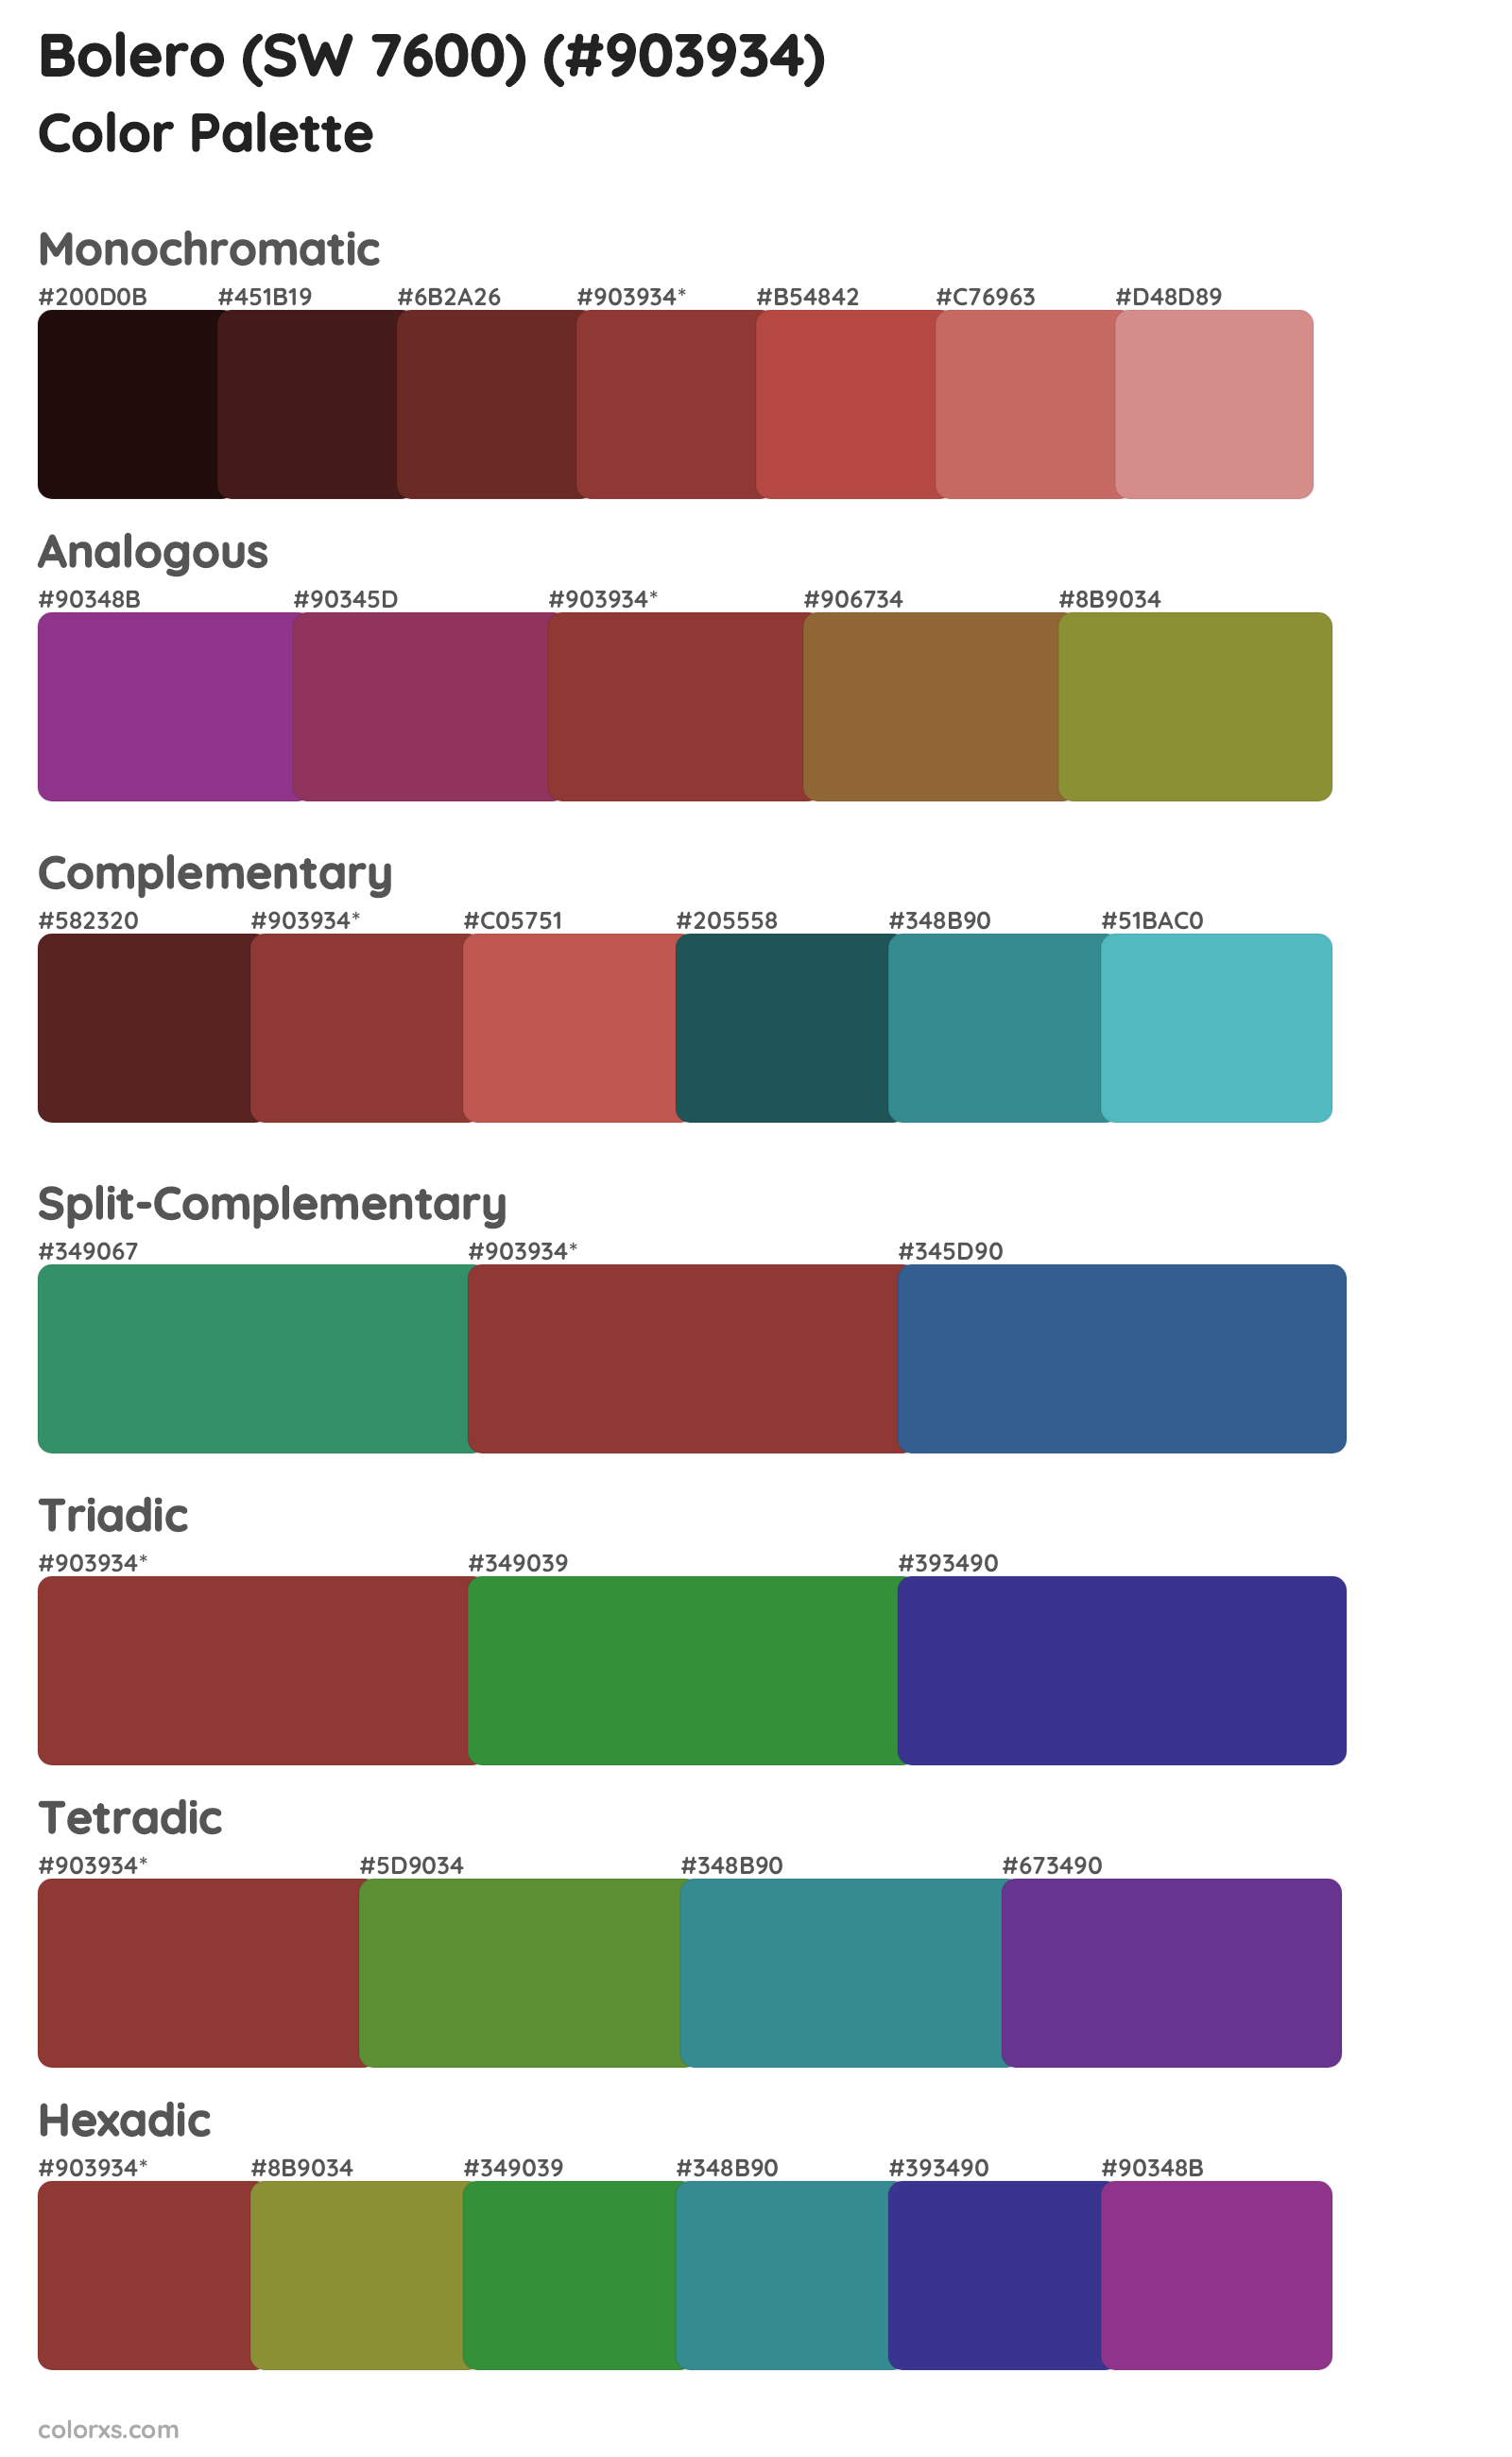 Bolero (SW 7600) Color Scheme Palettes